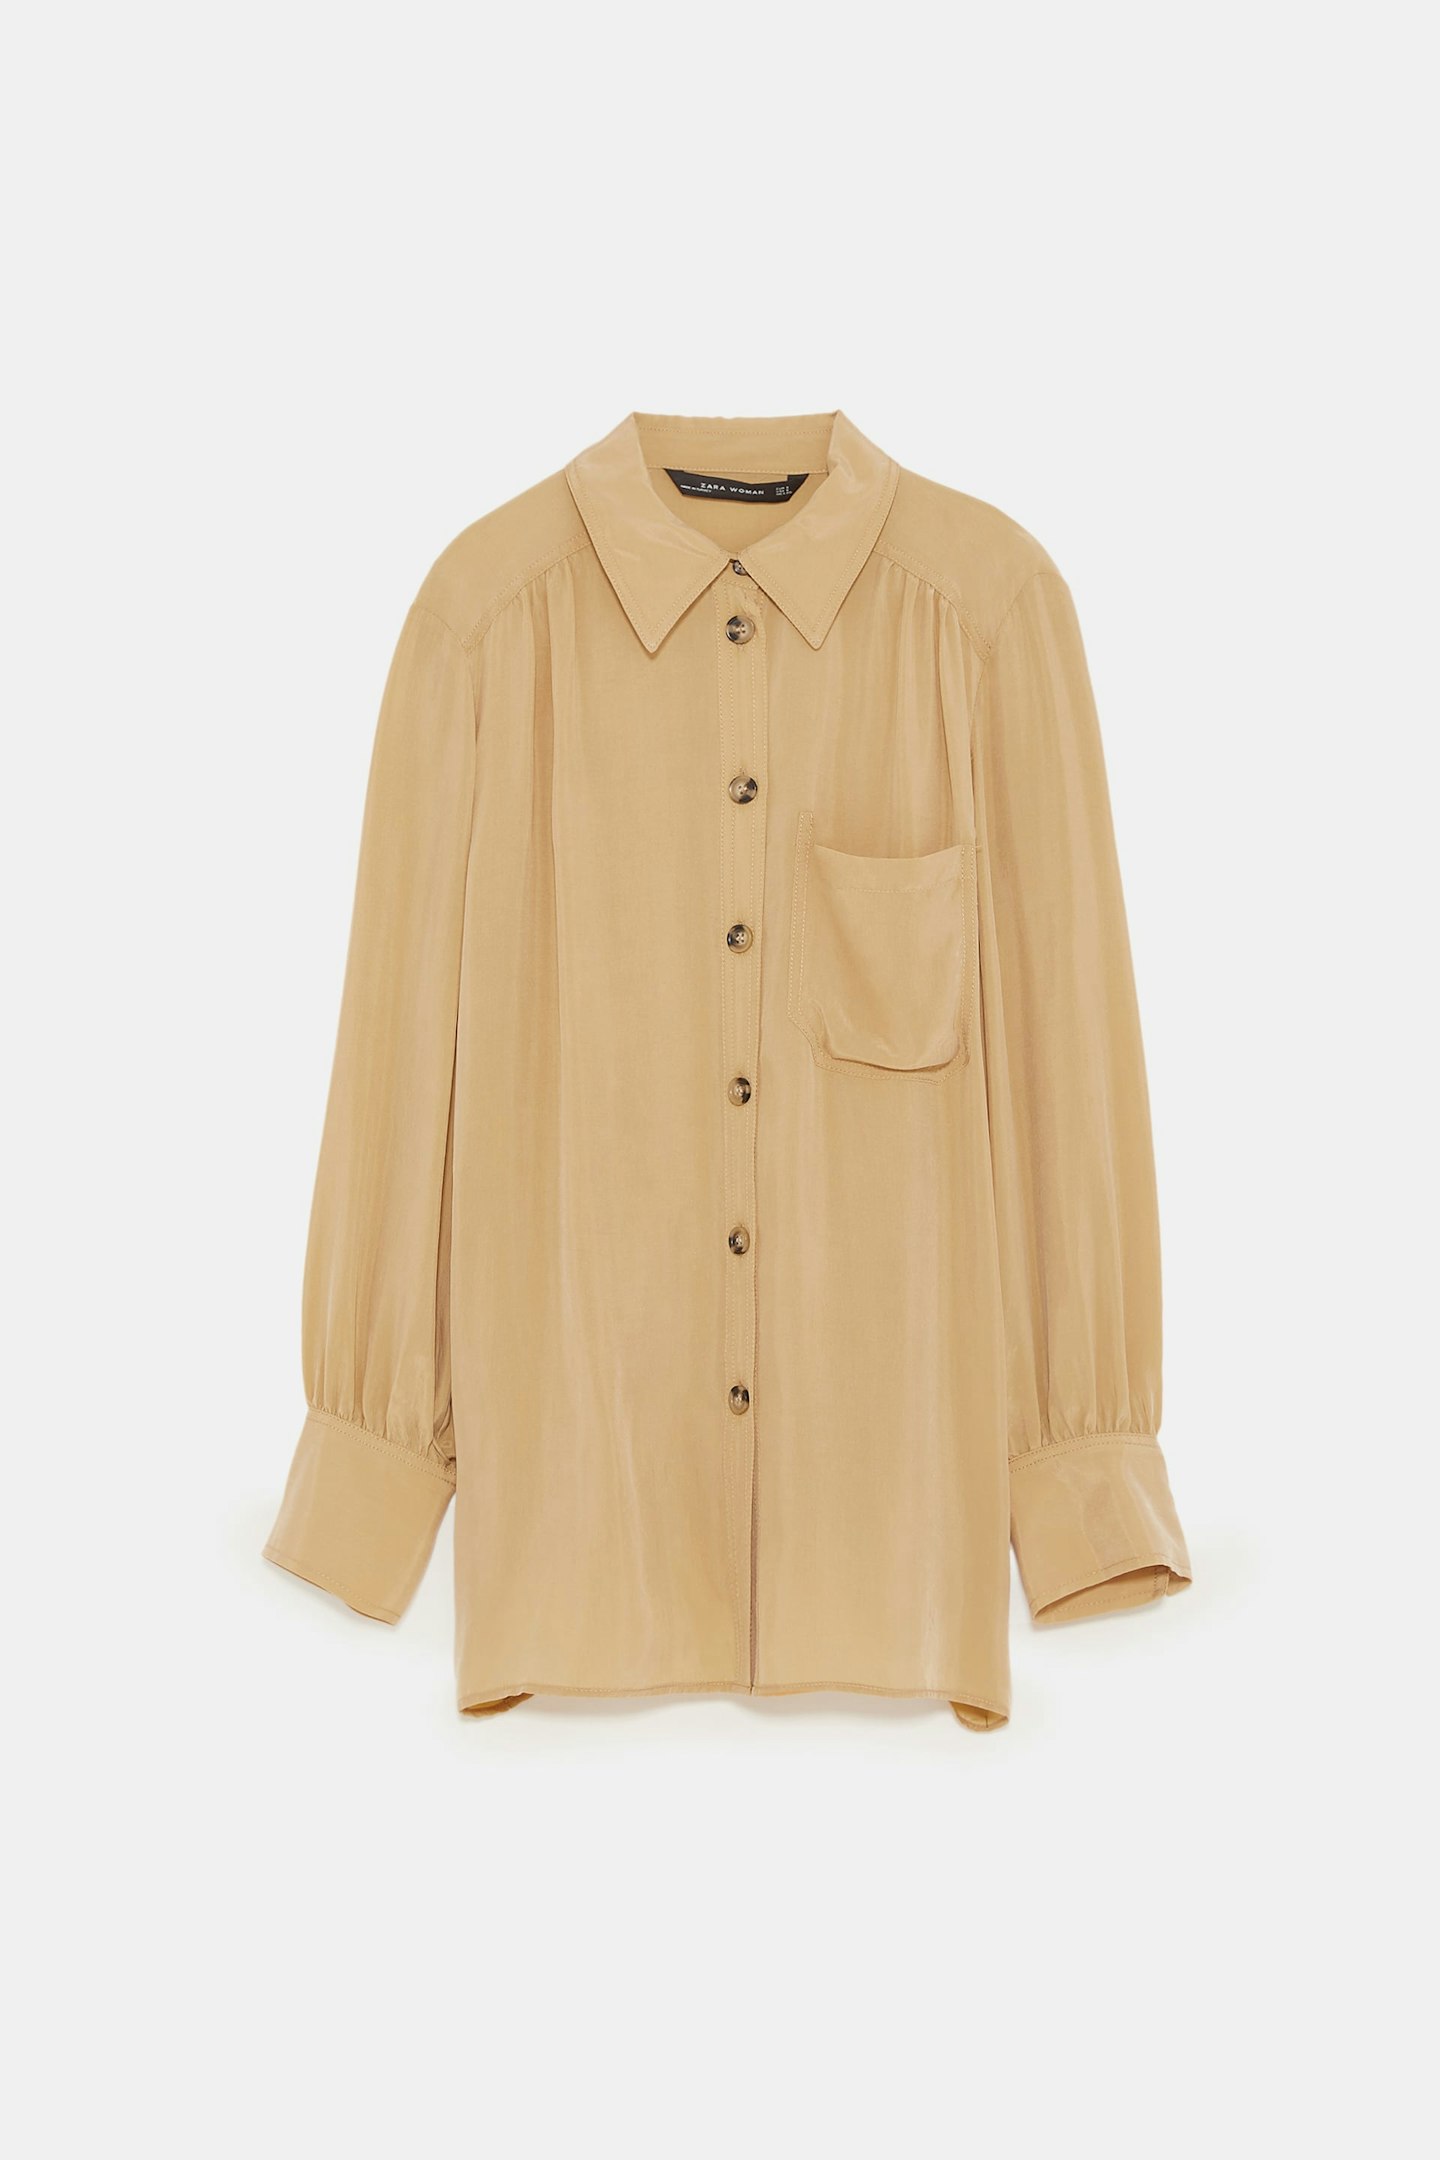 Zara, Cupro Shirt, £39.99